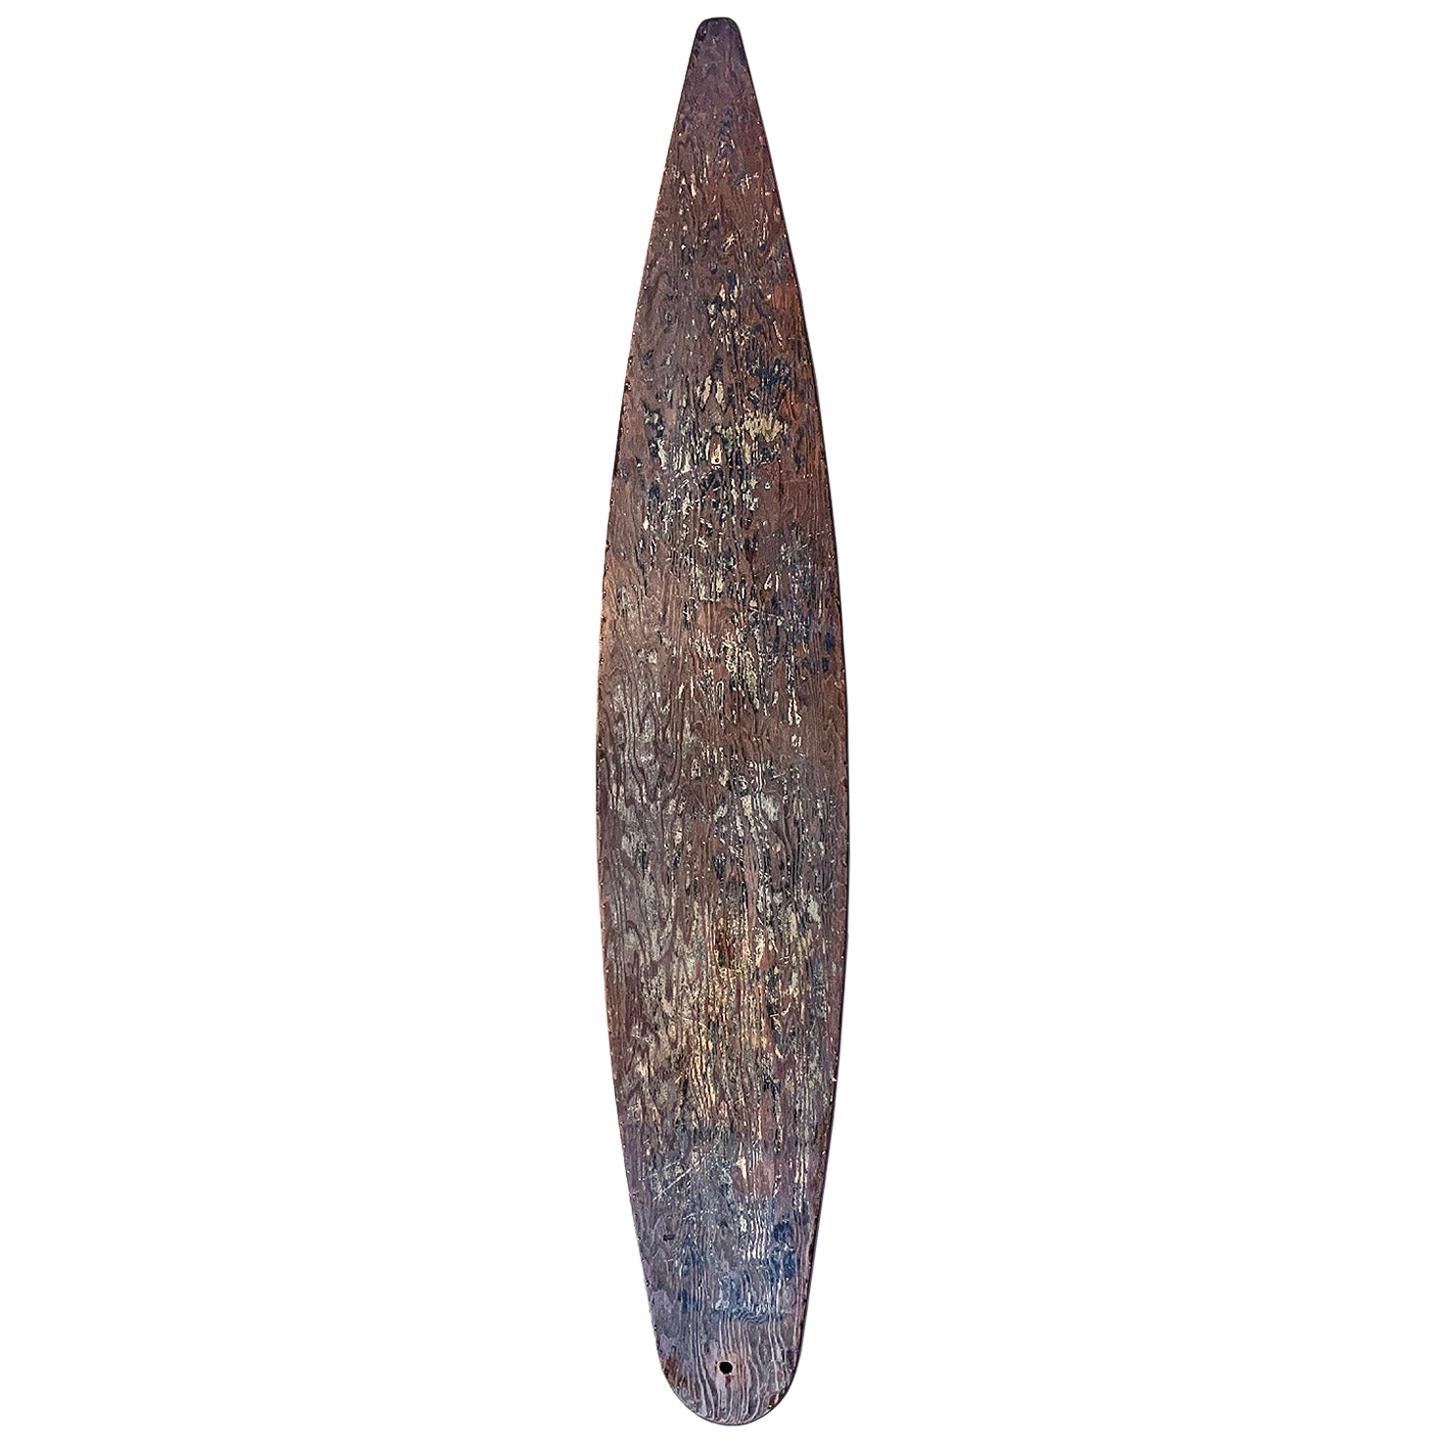 Antique Wooden Surfboard